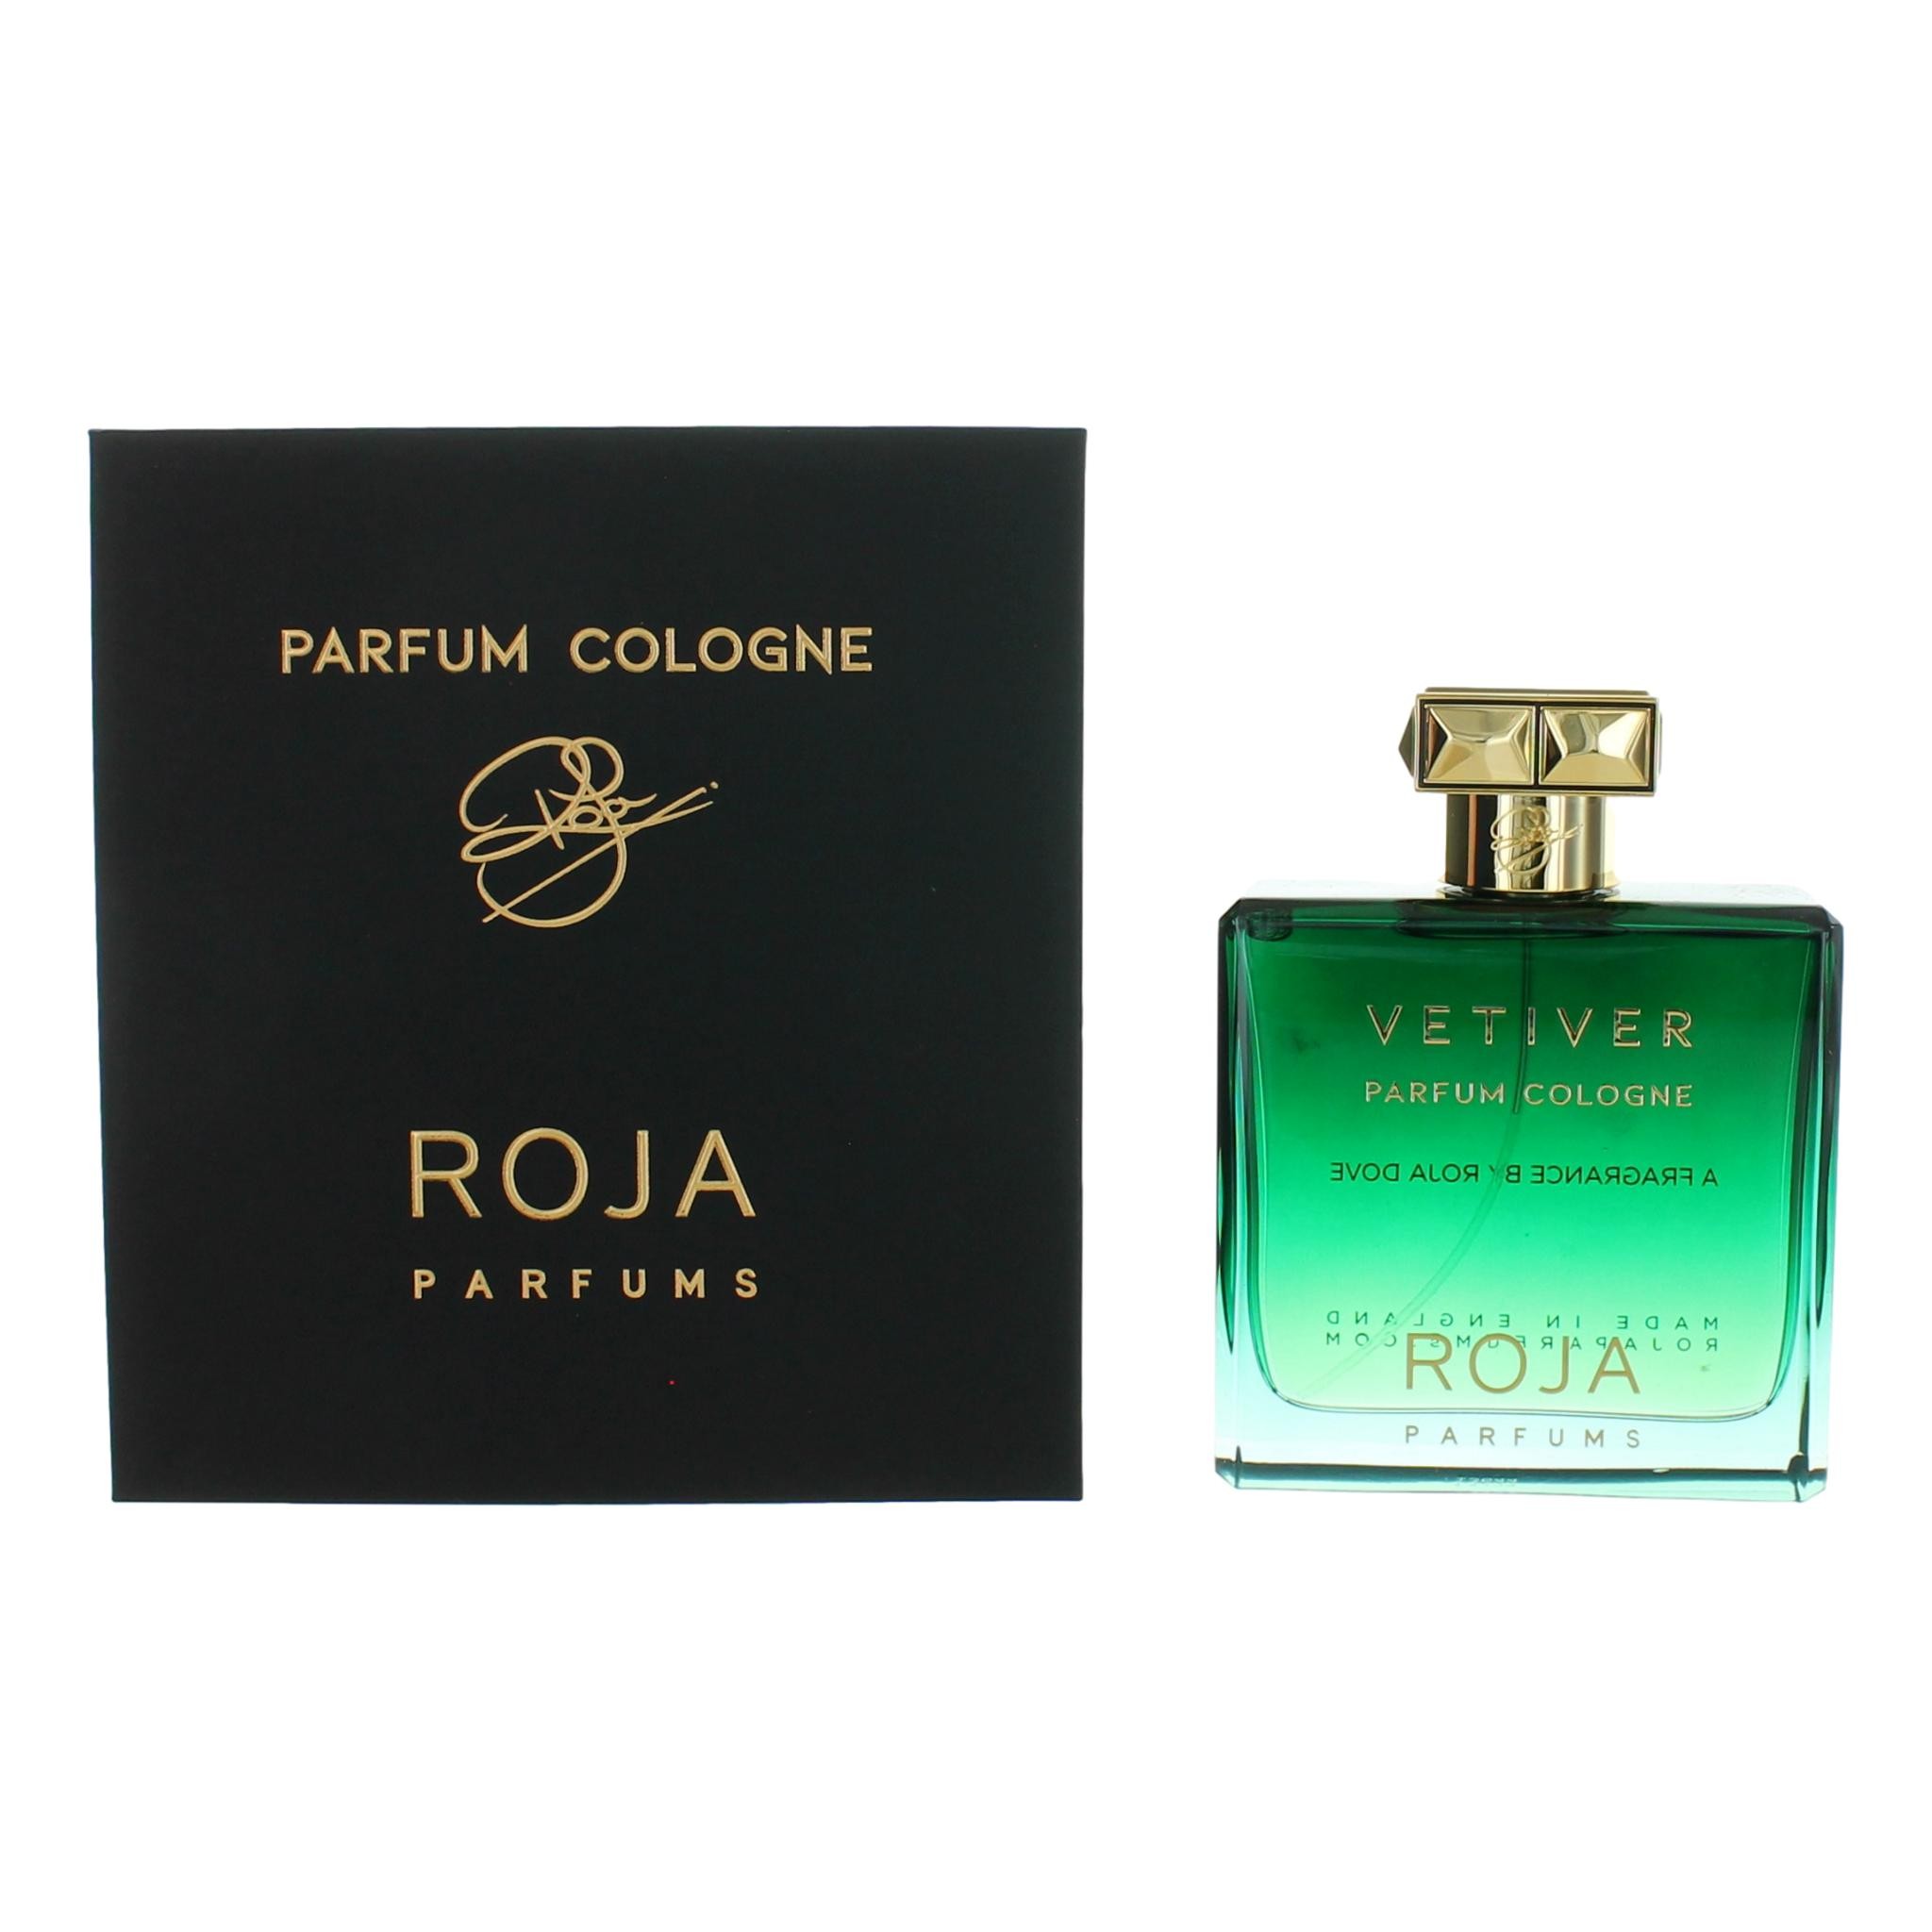 Vetiver by Roja Parfums 3.4 oz Parfum Cologne Spray for Men